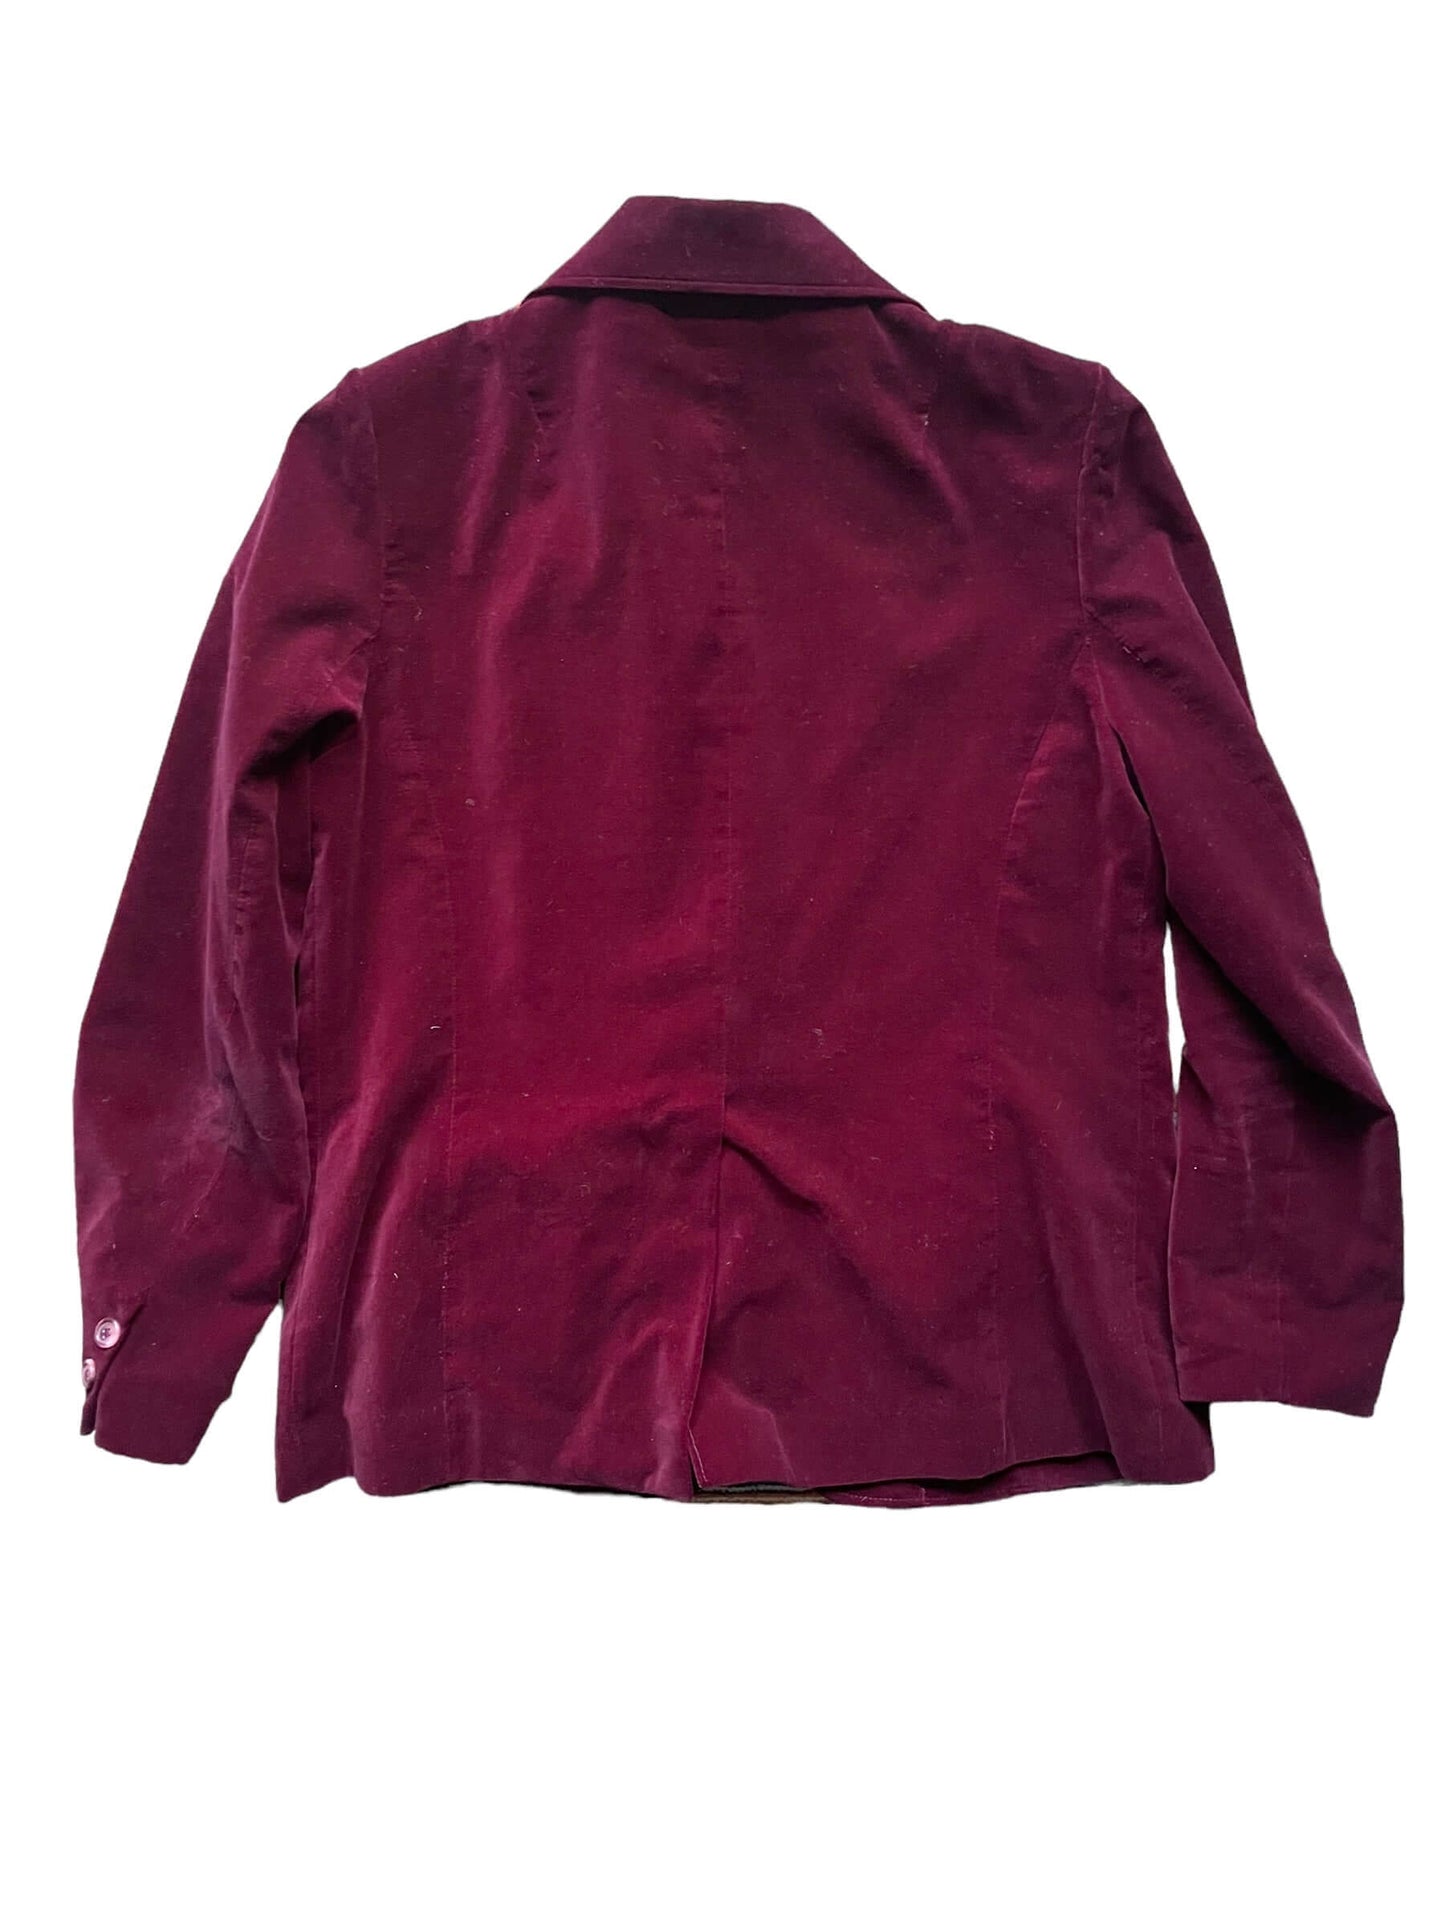 Full back view of Vintage 1970s Burgundy Velvet Blazer | Vintage Ladies Clothing | Barn Owl True Vintage